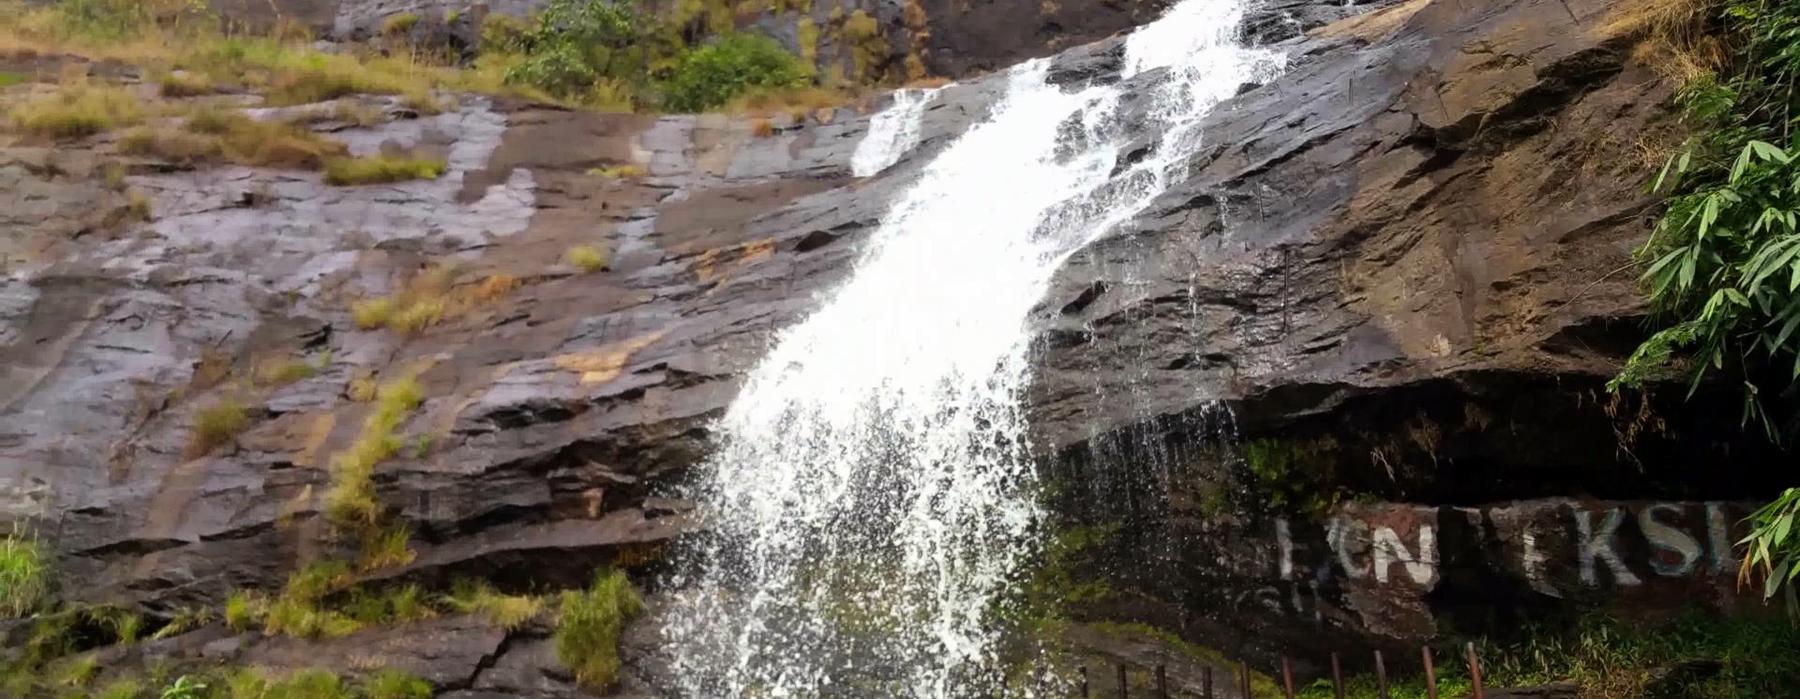 Cheeyappara Waterfall